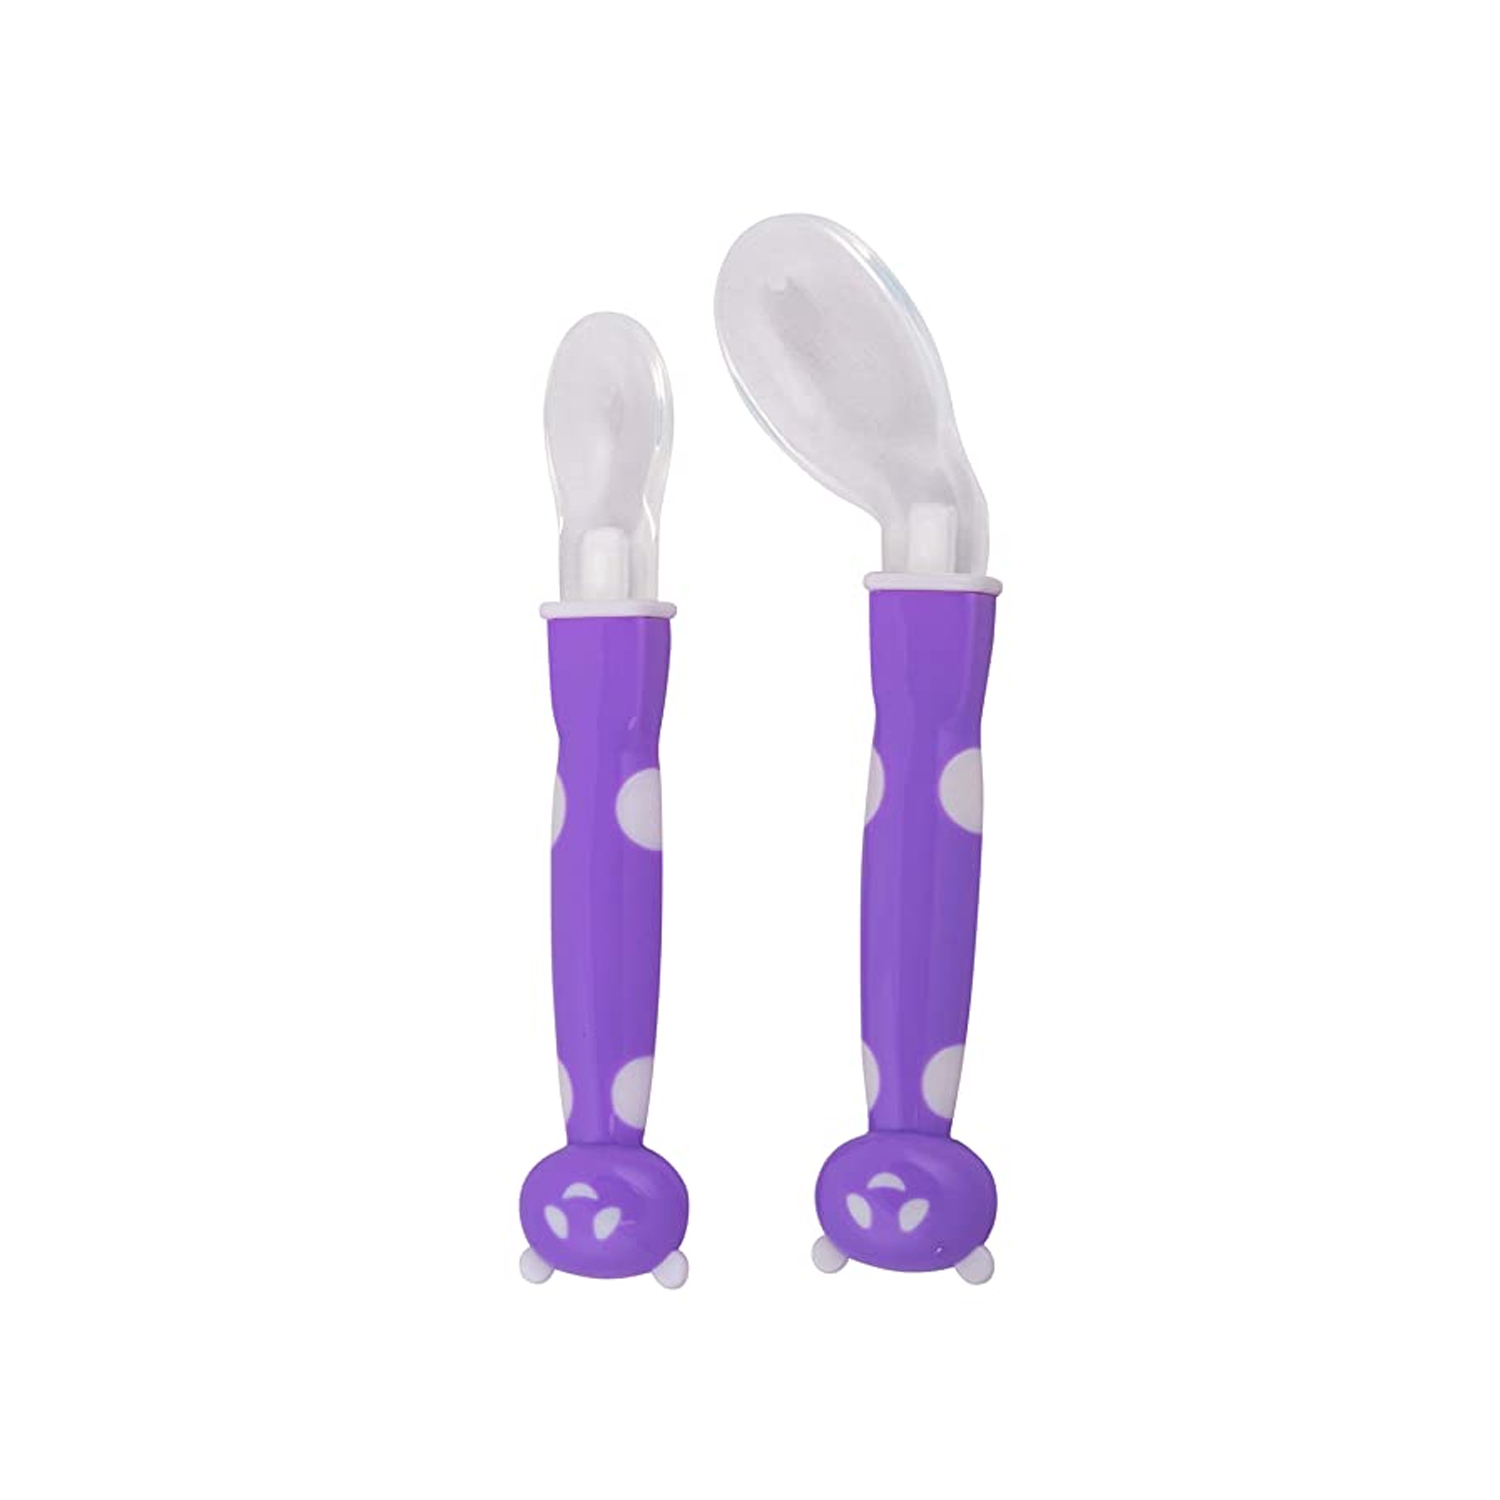 LuvLap Joy Star Baby Self-Feeding Spoon Set of 2 (Magenta/White) - Cureka -  Online Health Care Products Shop